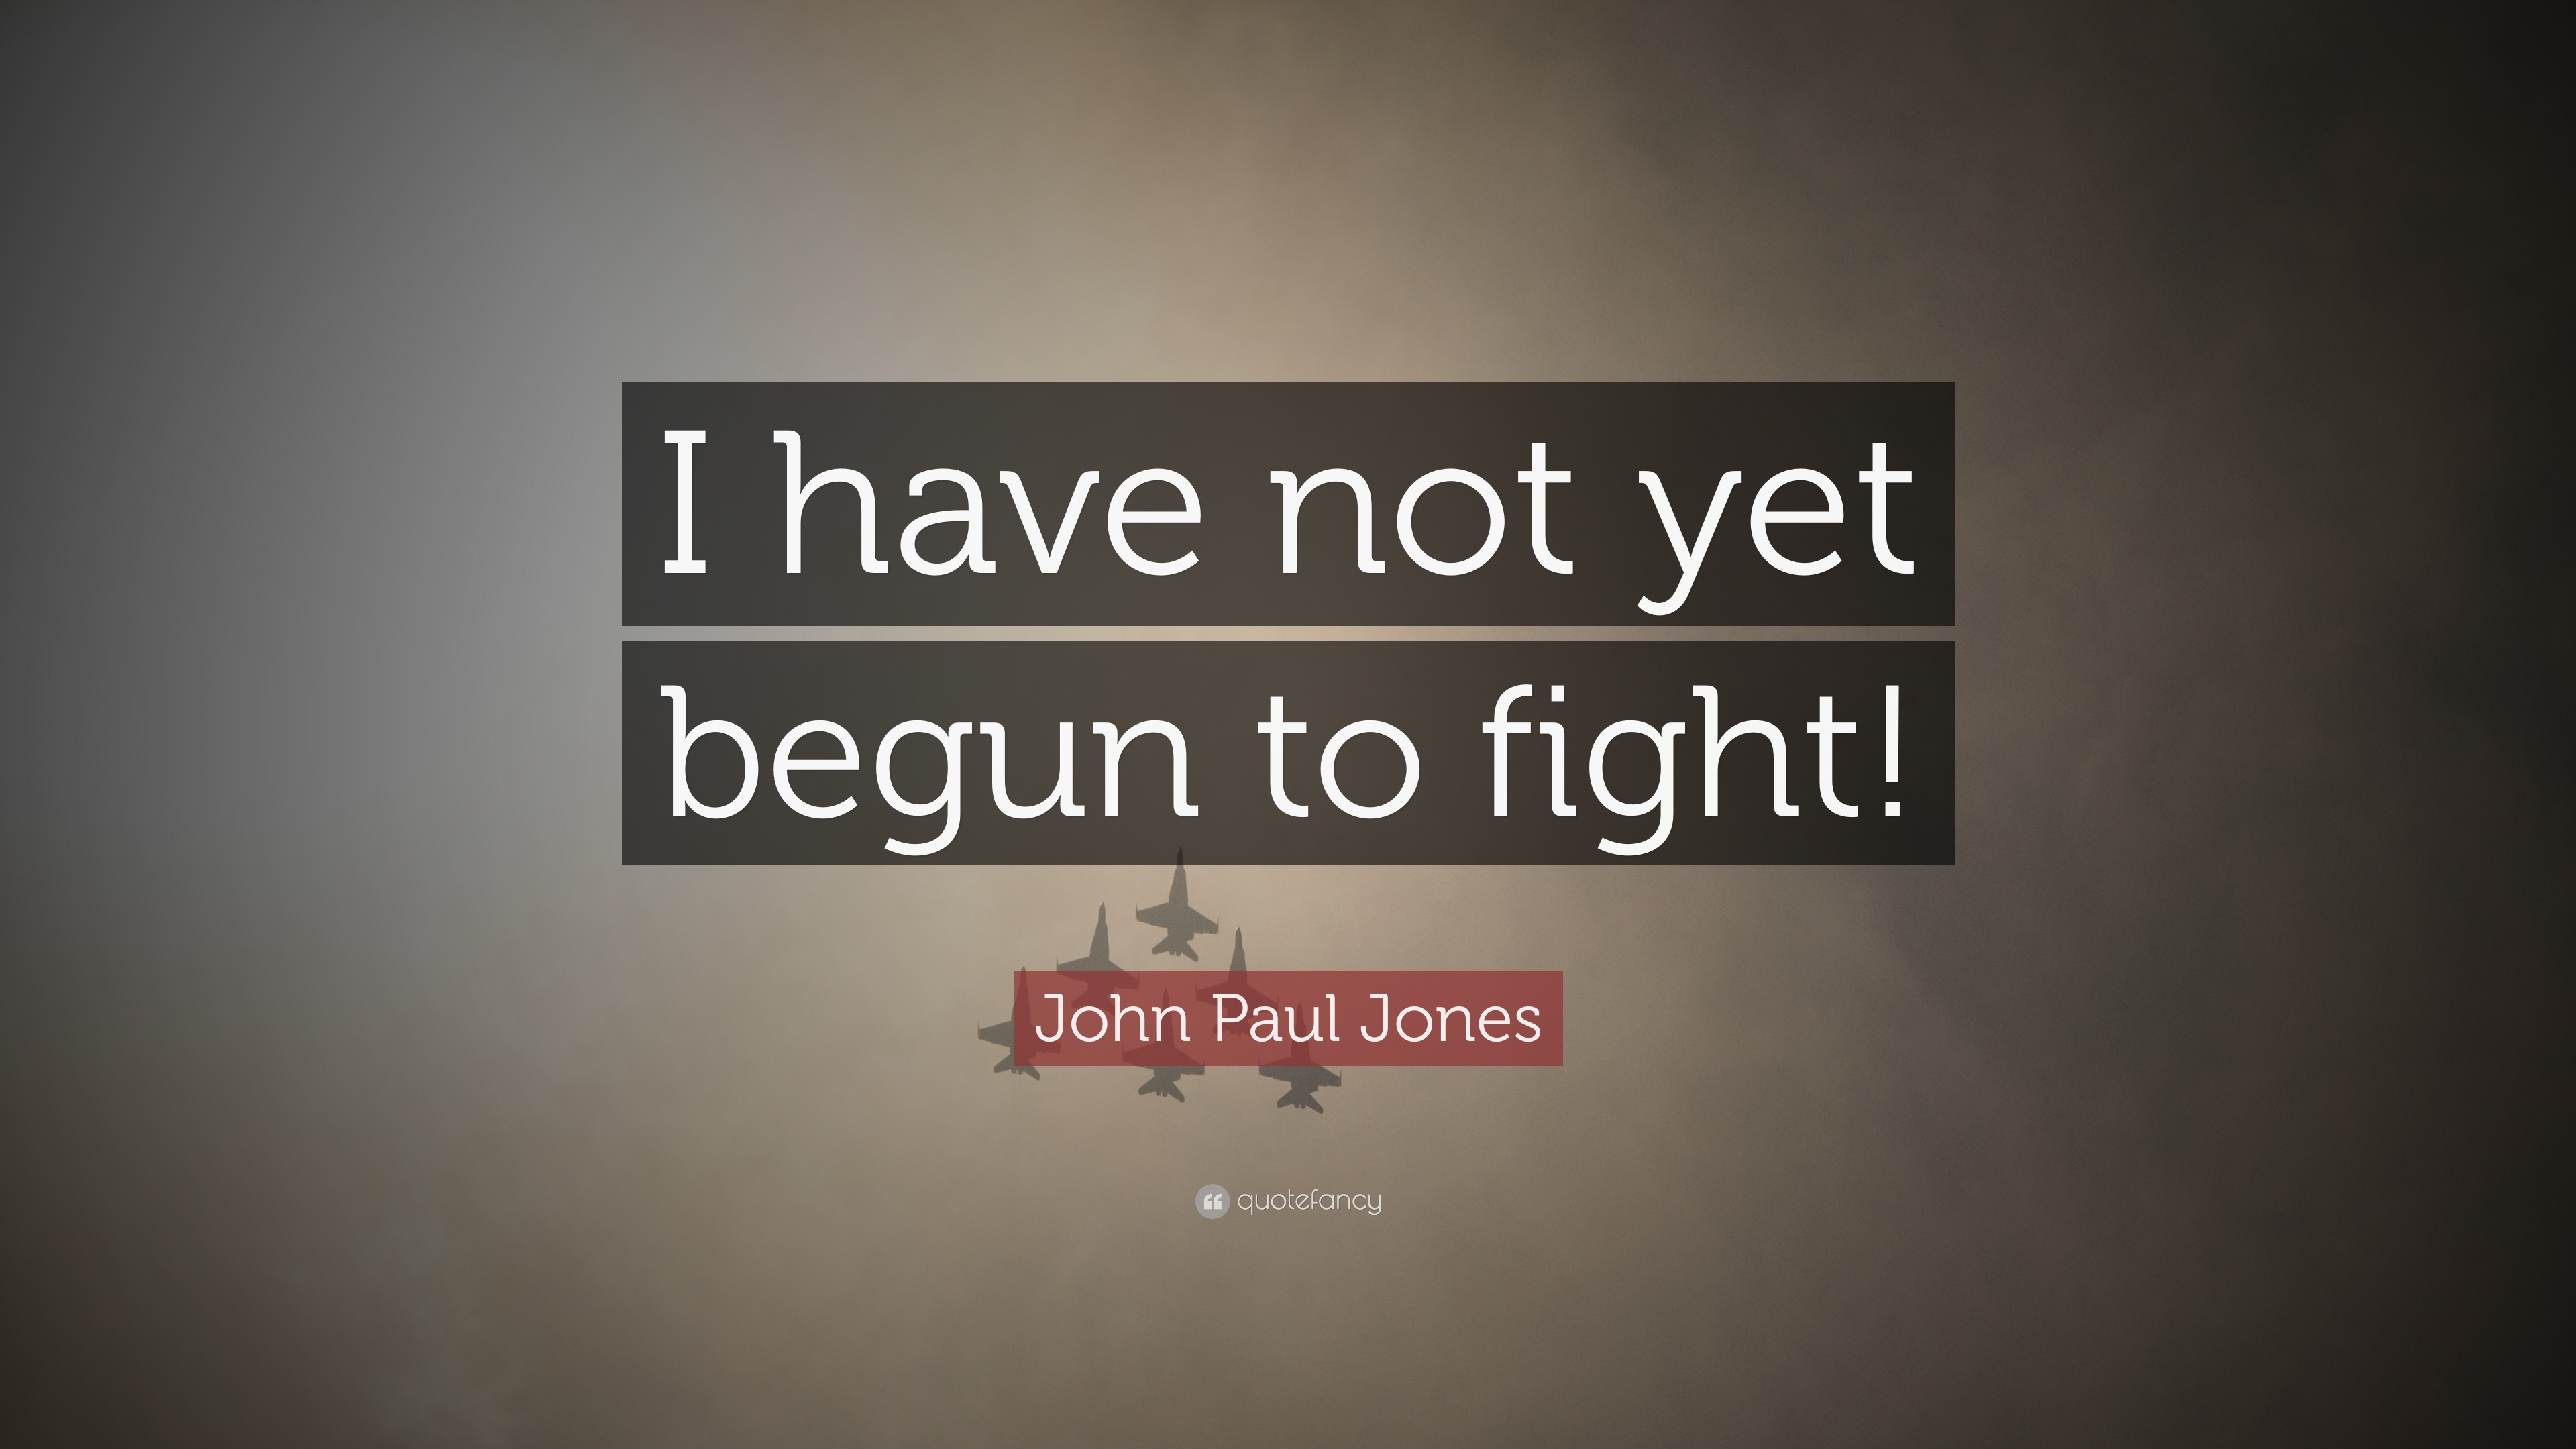 John Paul Jones Quotes (2021 Update)